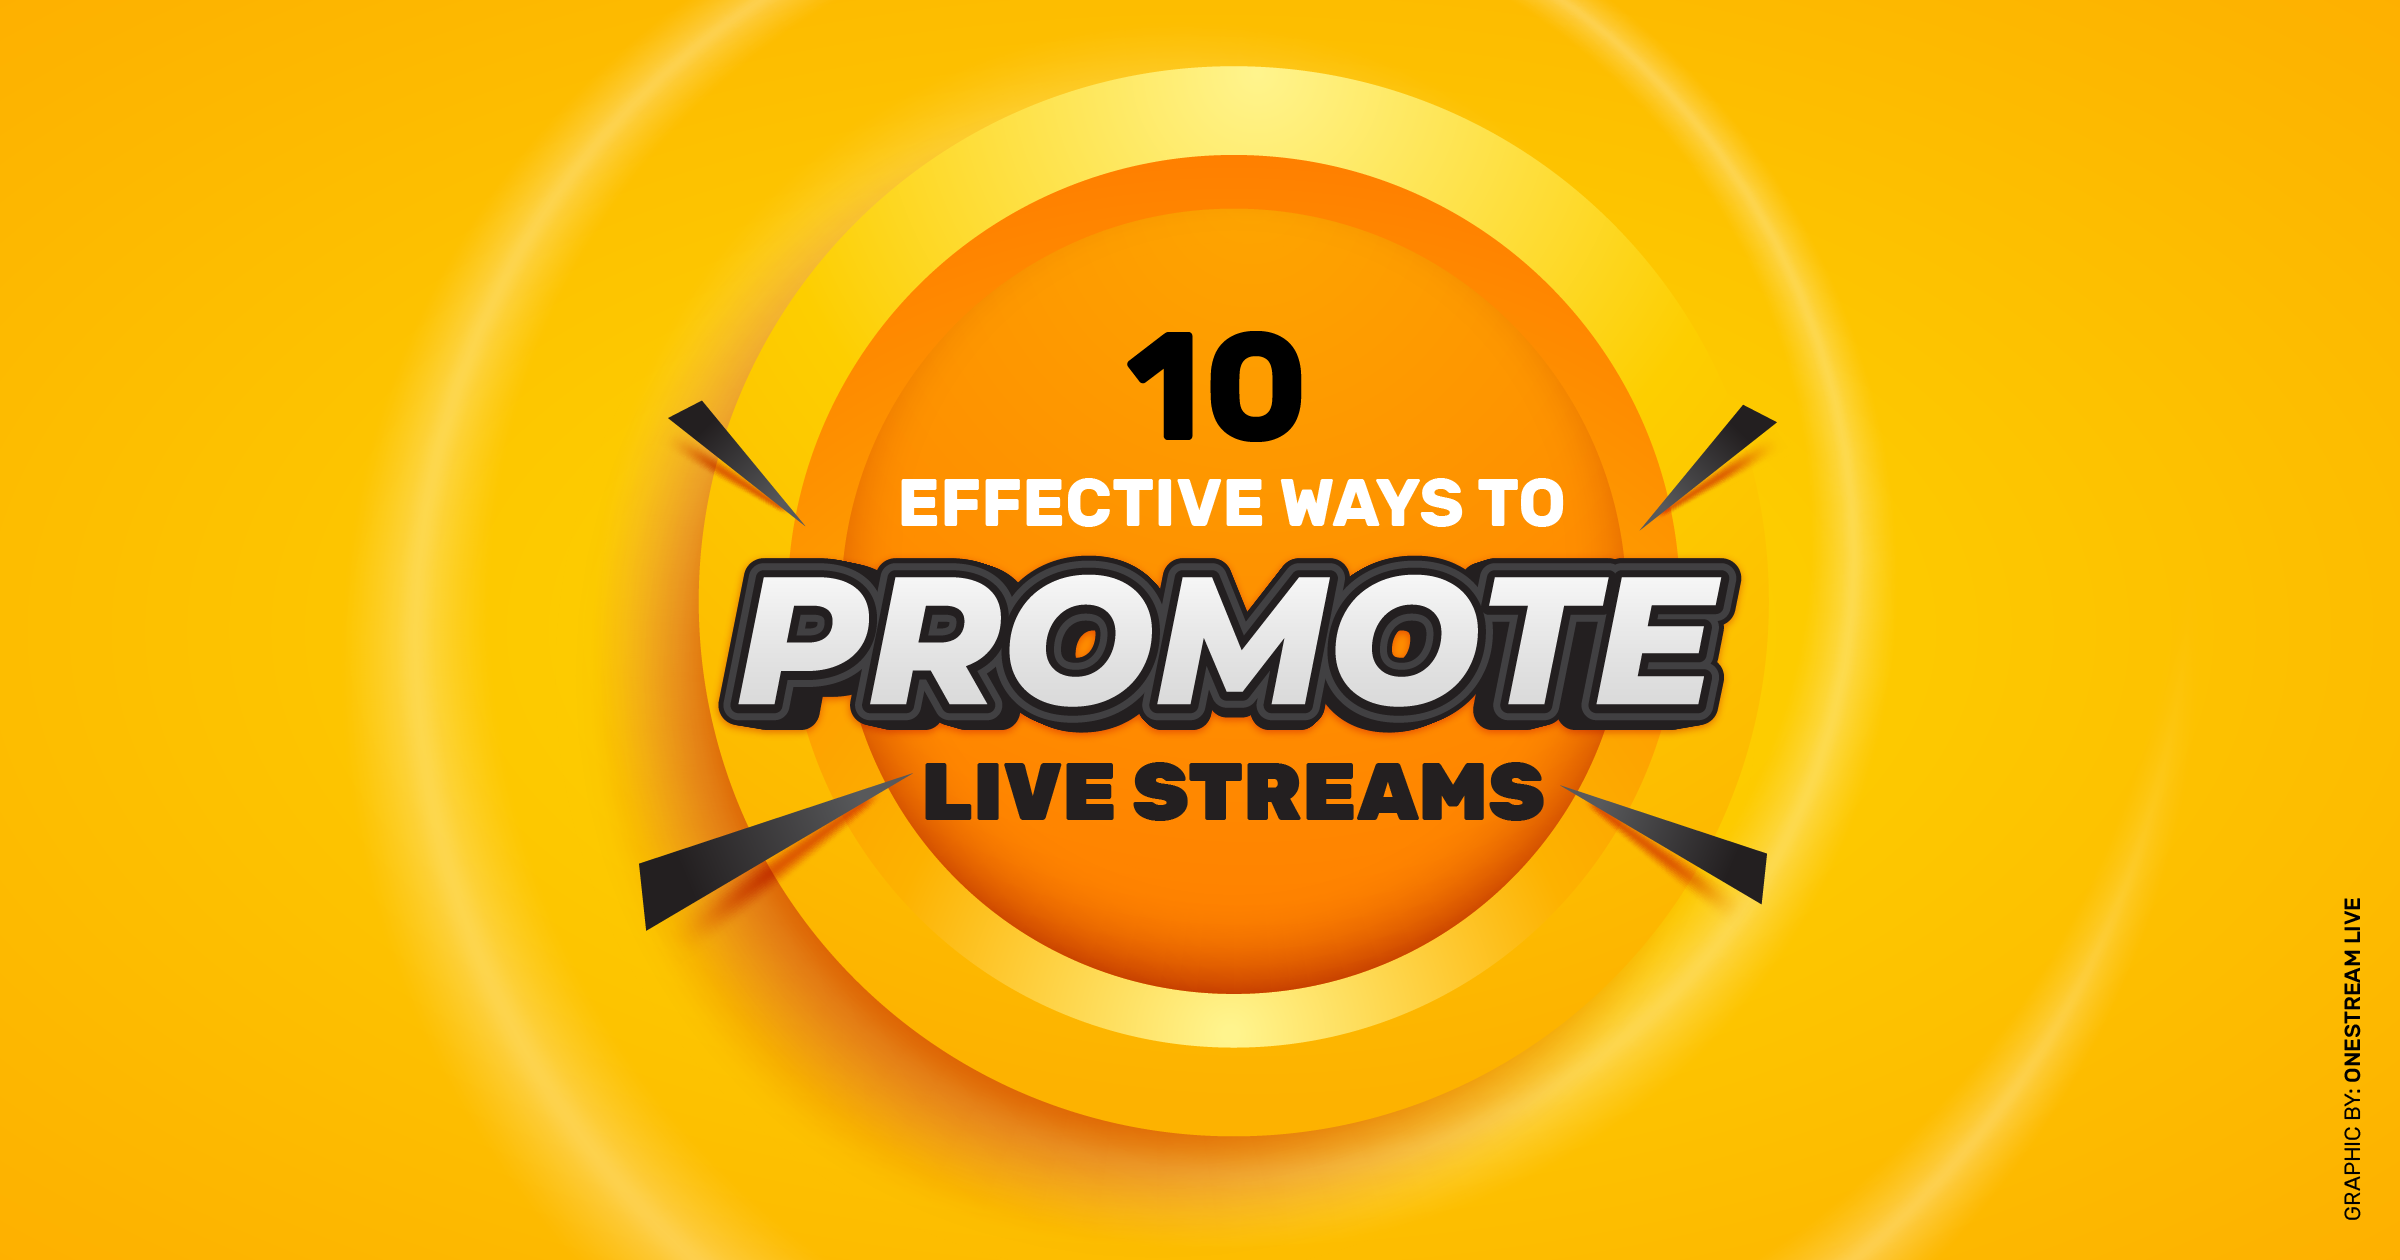 10 effective ways to promote live streams